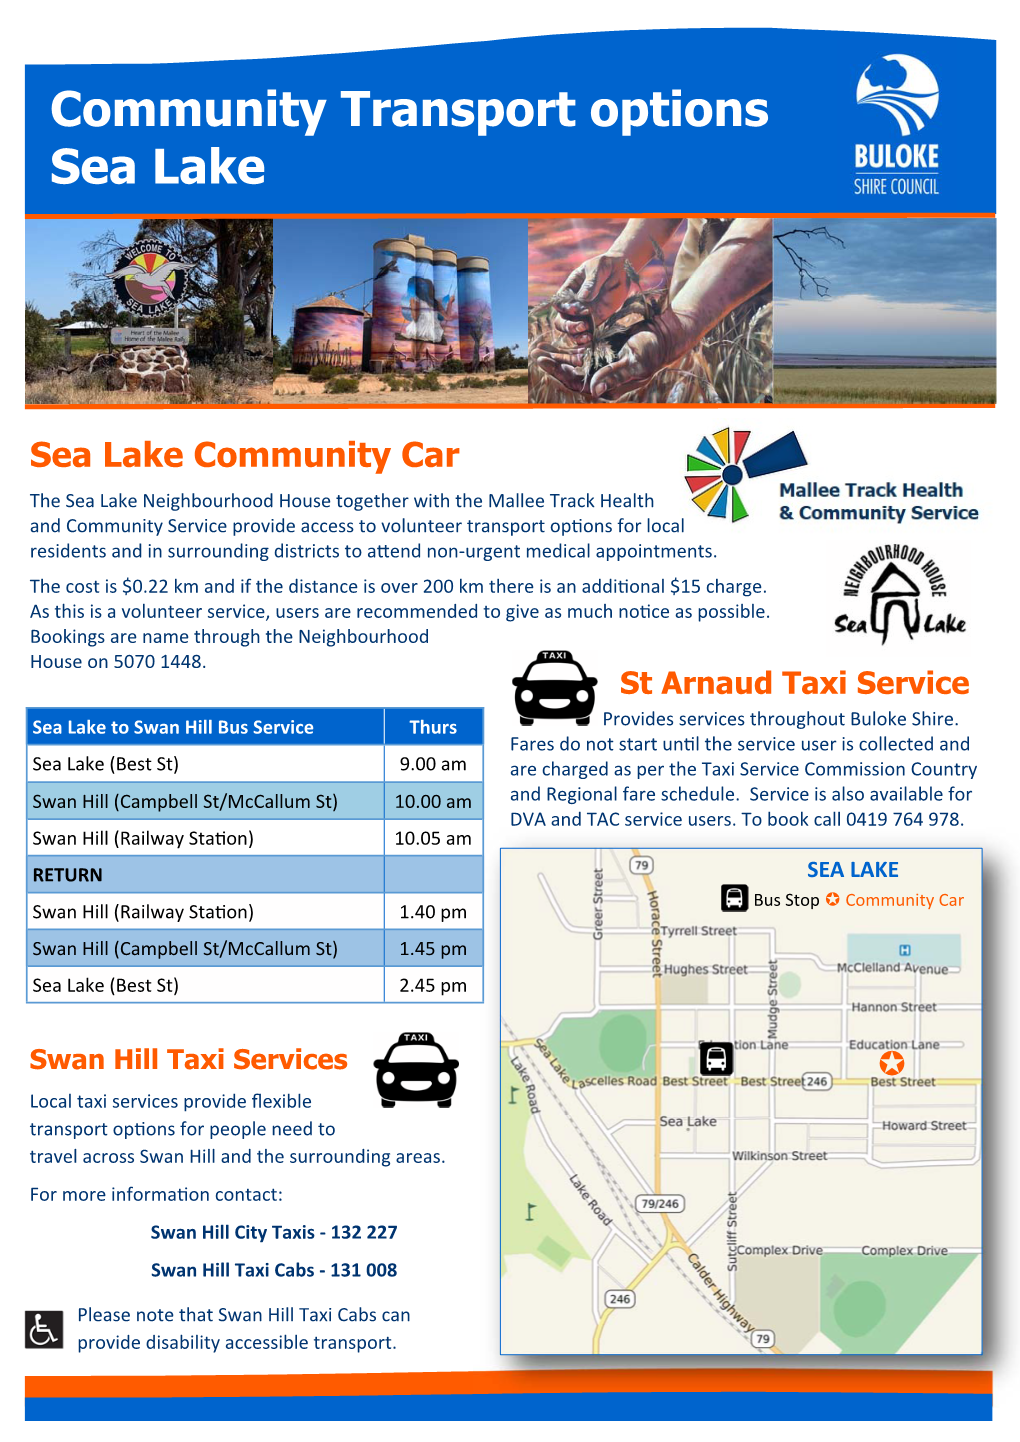 Sea Lake Community Transport Options